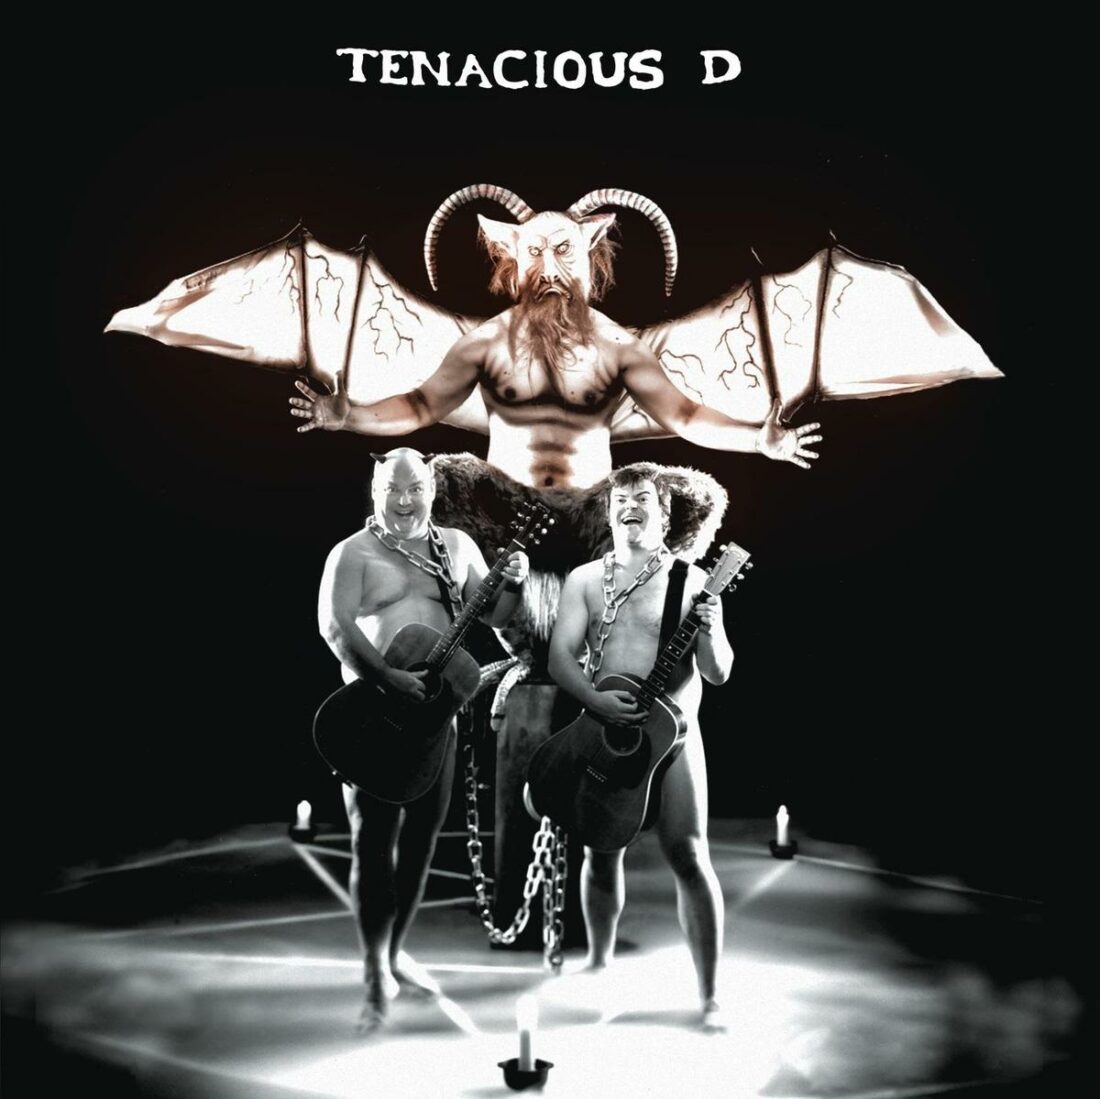 Tenacious D, Tenacious D. (From: Amazon)